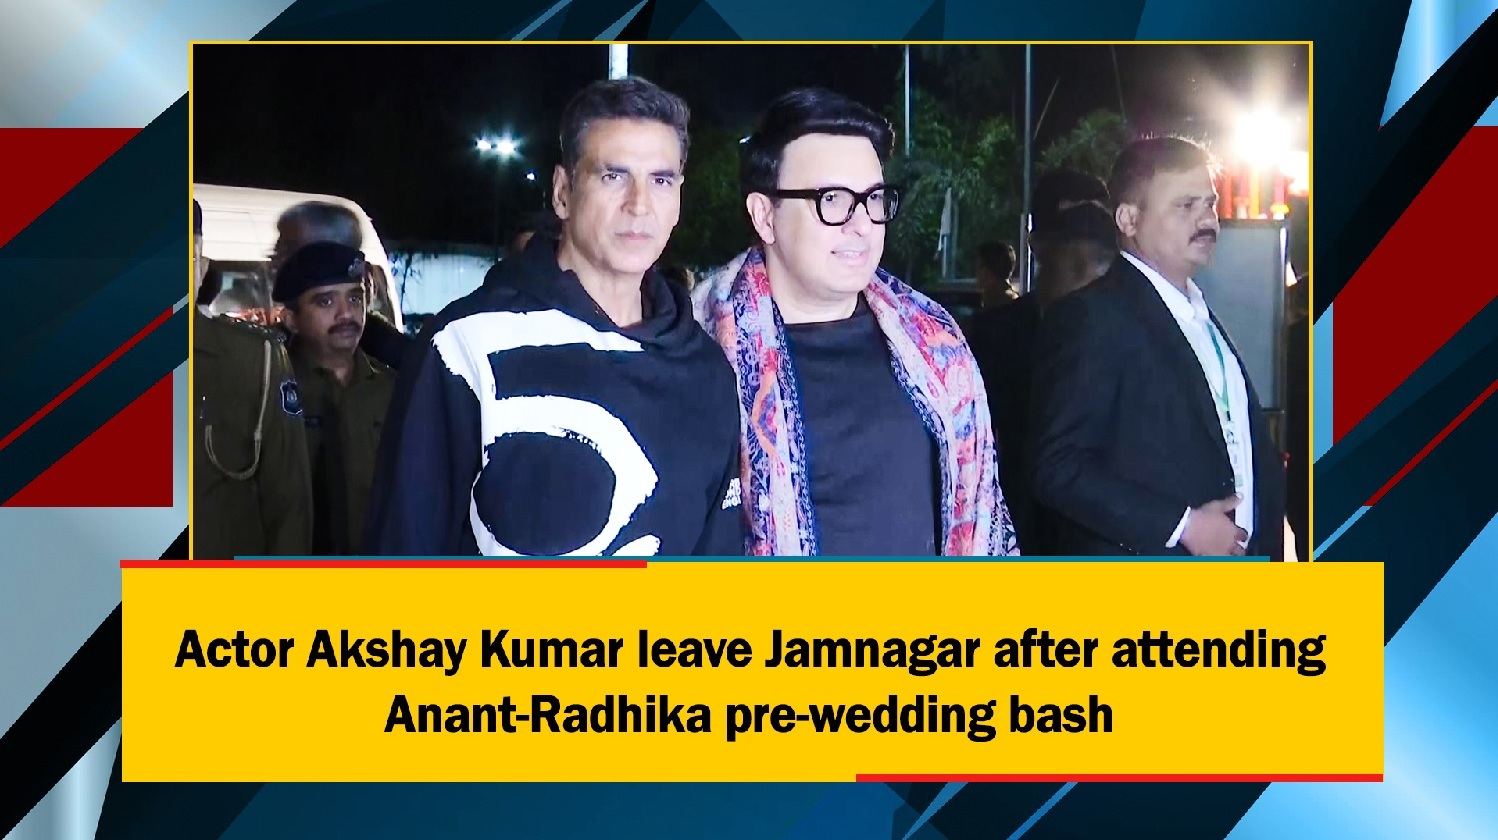 Actor Akshay Kumar leave Jamnagar after attending Anant-Radhika pre-wedding bash